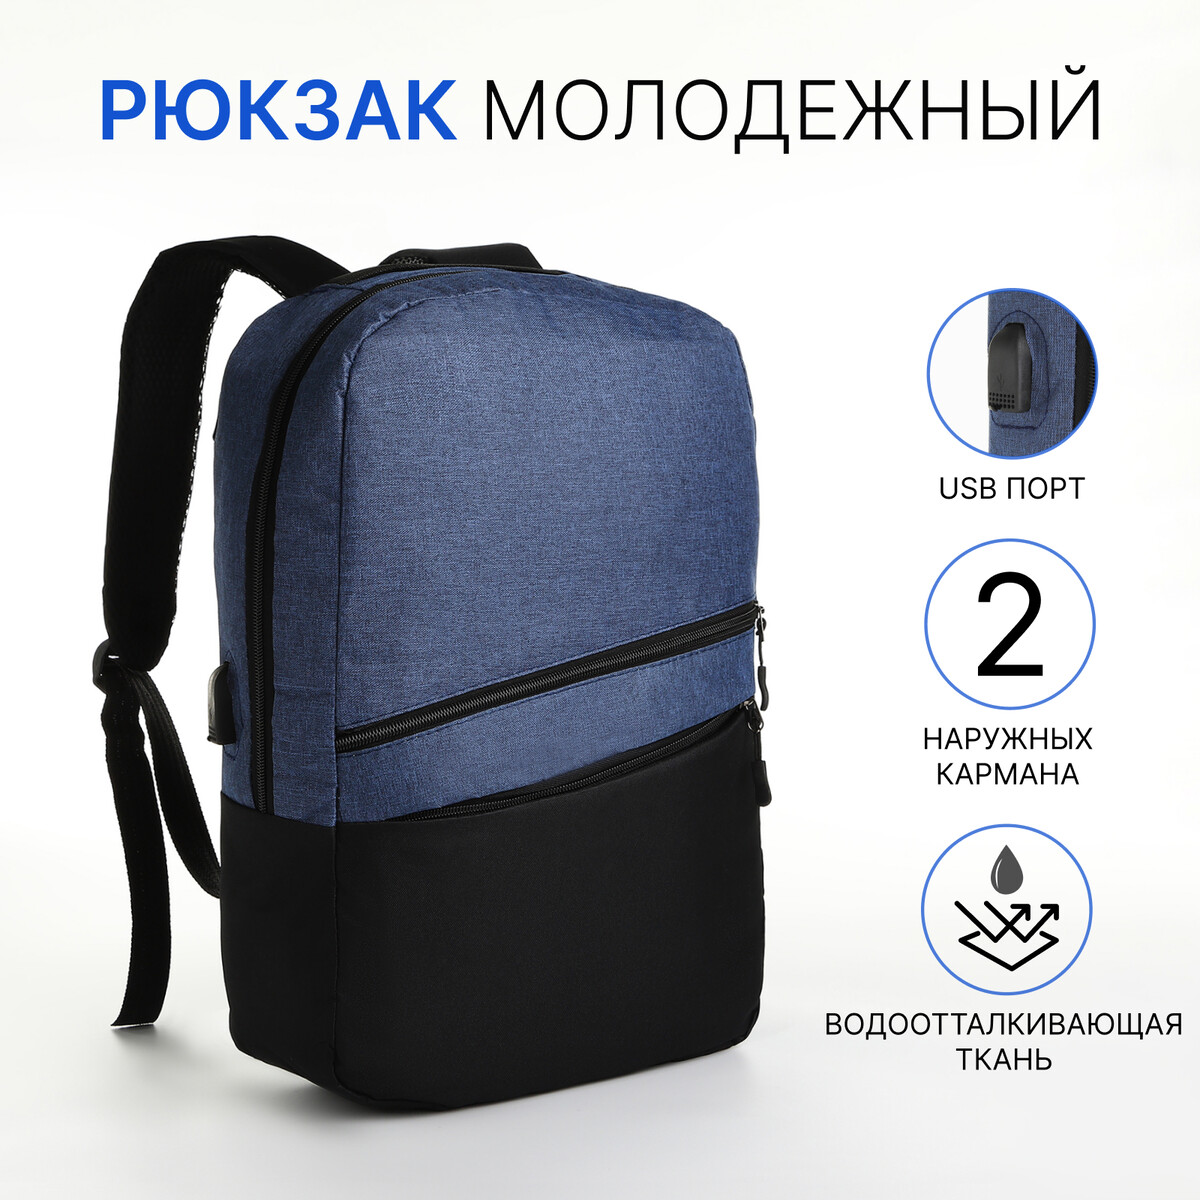 Рюкзак городской с usb из текстиля на молнии, 2 кармана, цвет черный/синий рюкзак городской с usb зарядкой sebar